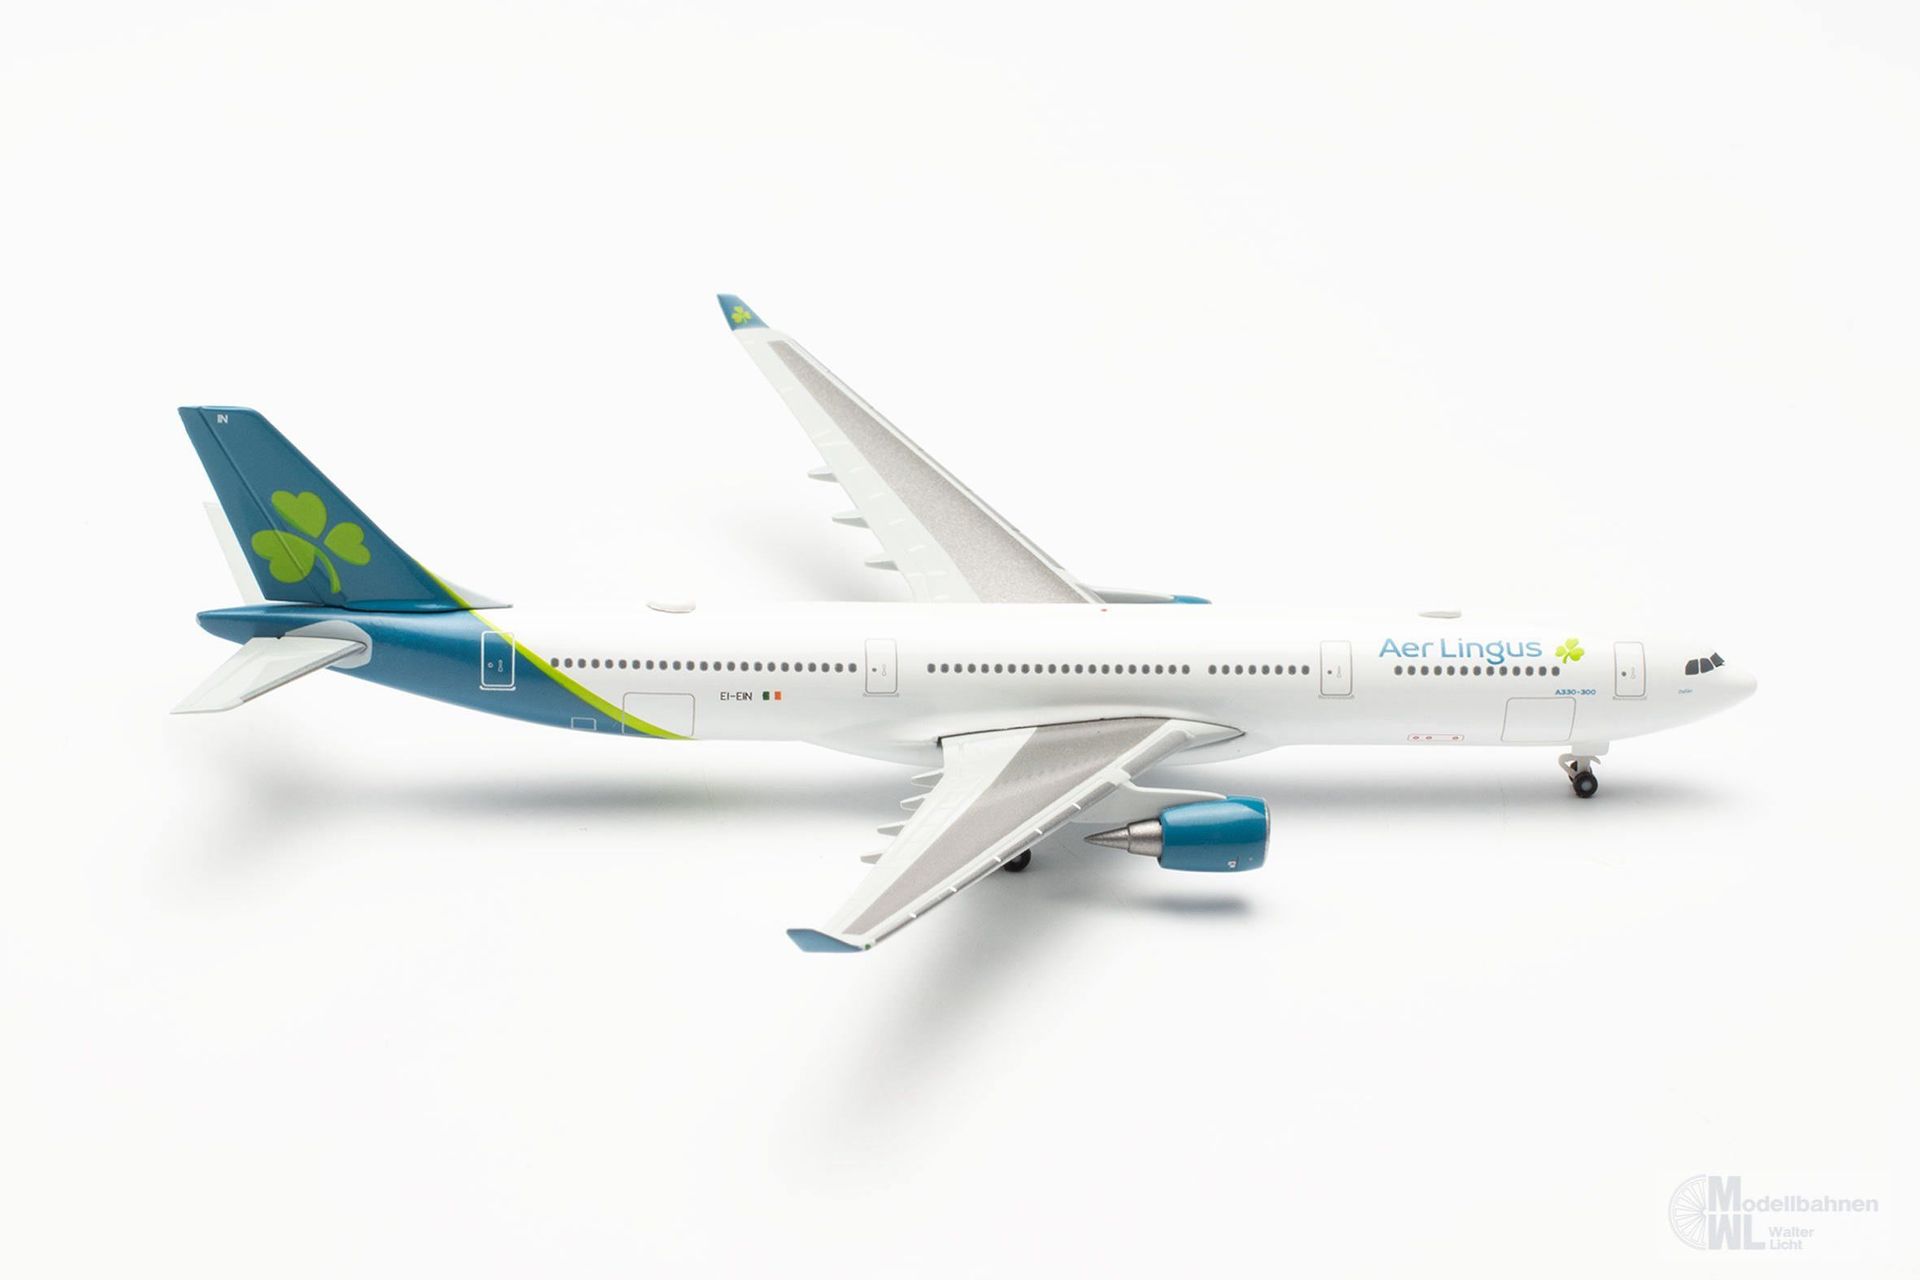 Herpa 536363 - Aer Lingus Airbus A330-300 1:500